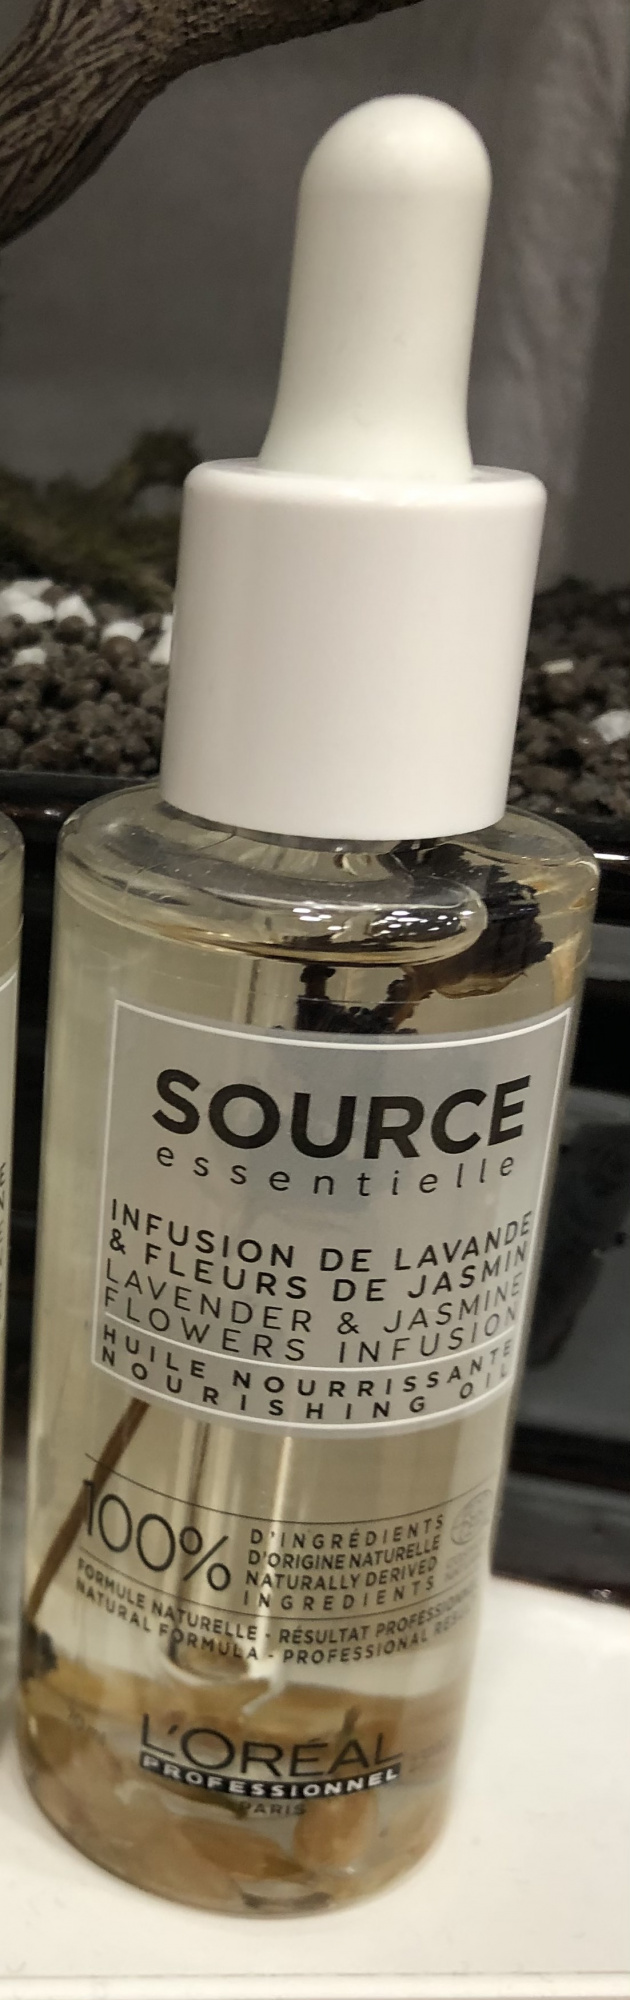 HUILE LAVANDE JASMIN source L'Oréal